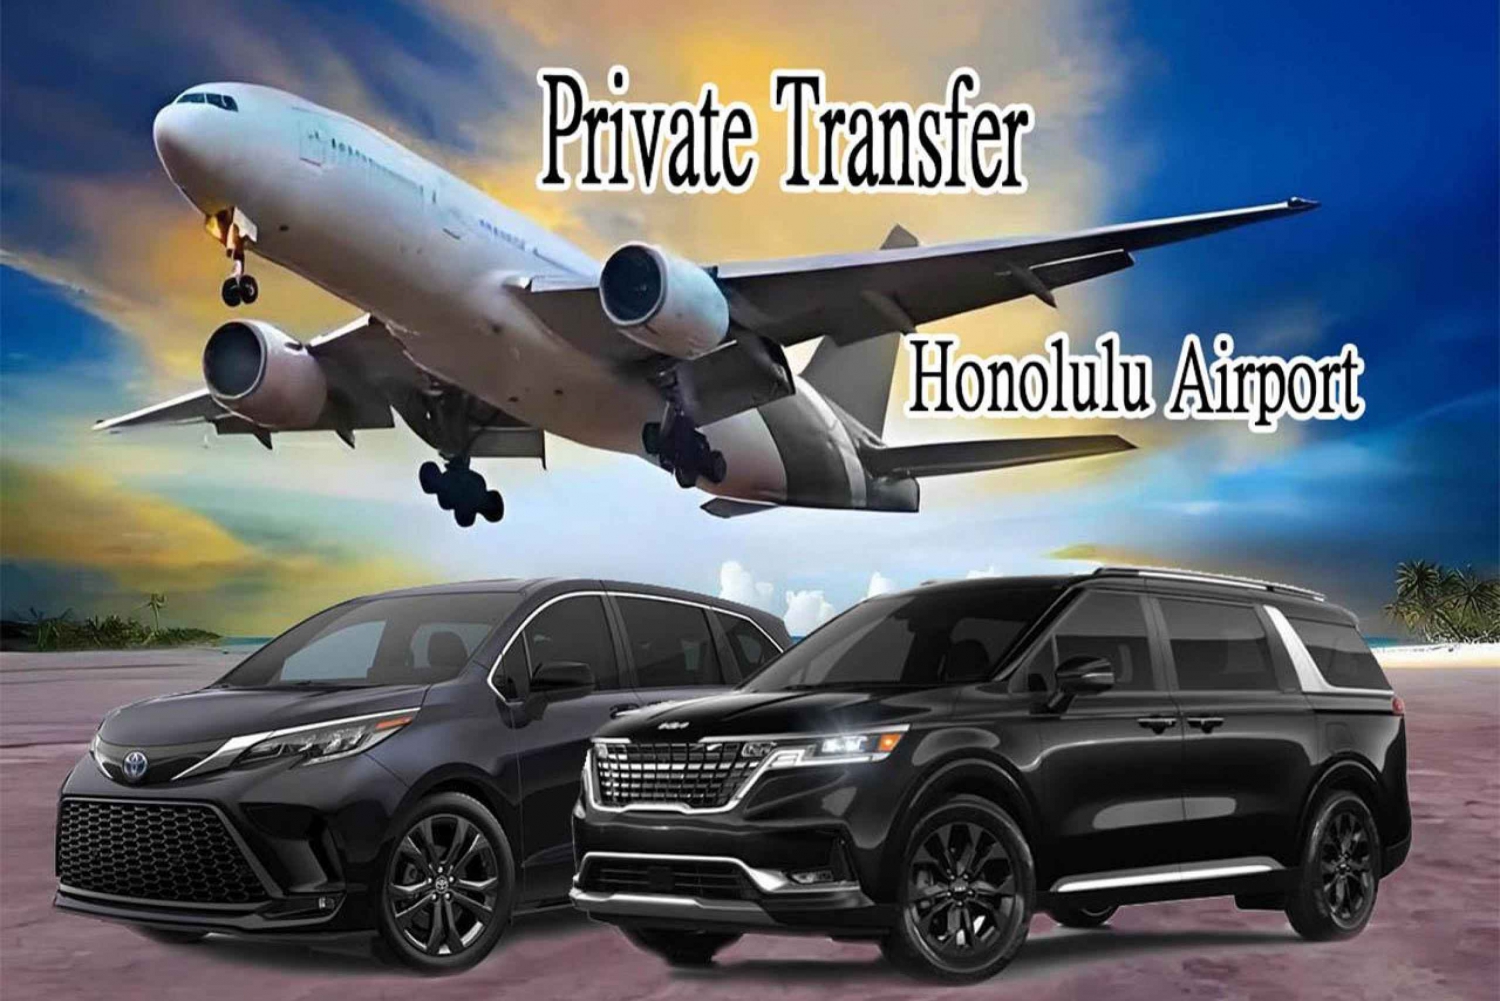 【ARRIVÉE】Aéroport d'Honolulu - Transfert privé à Waikiki